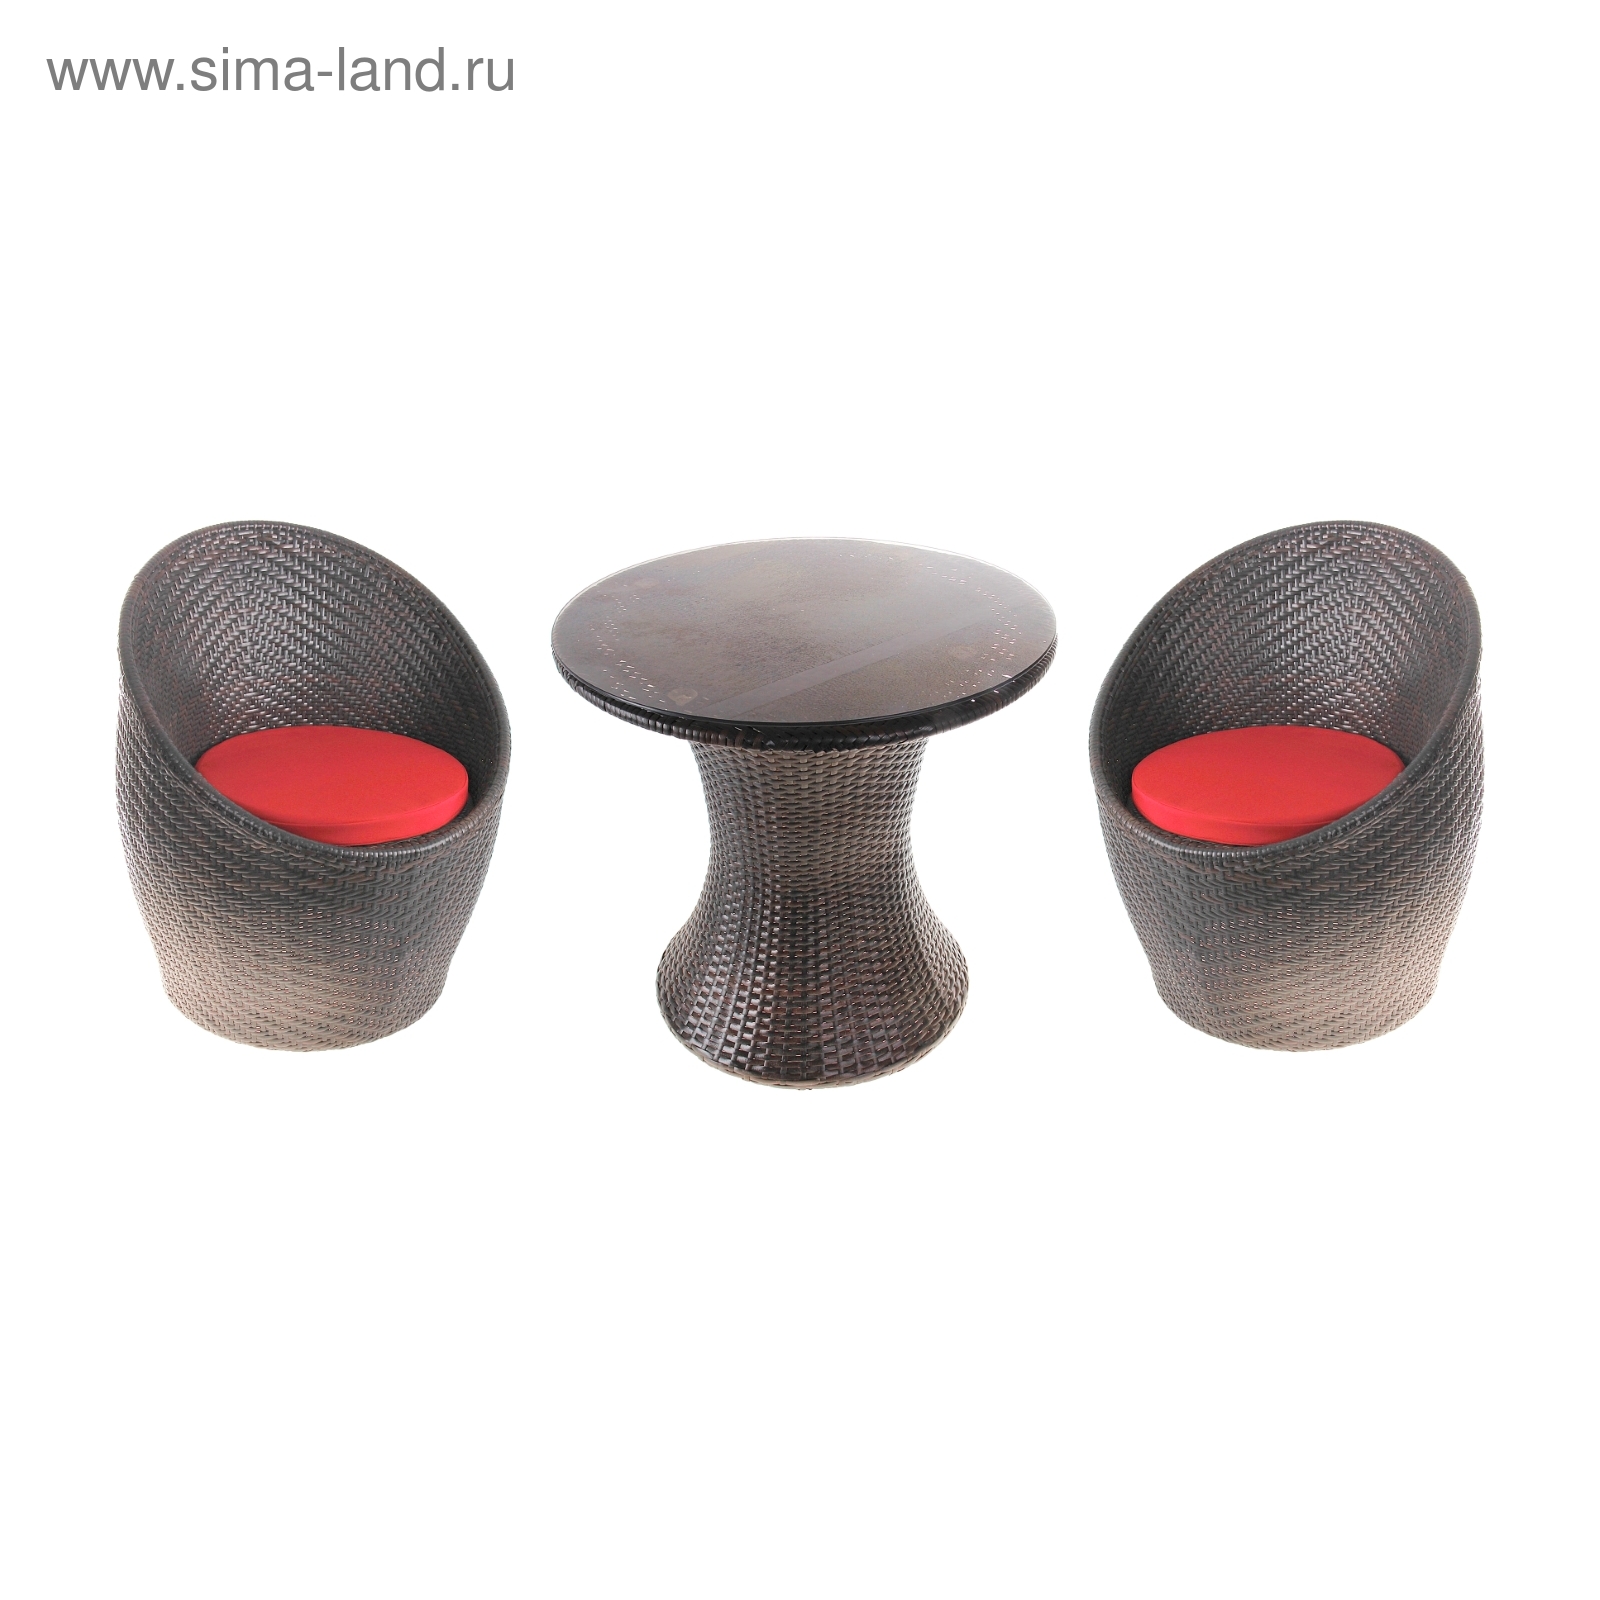 Набор: стол, размер 60 х 60 х 60 см, 2 кресла, размер 63 х 70 х 77 см, до 100 кг